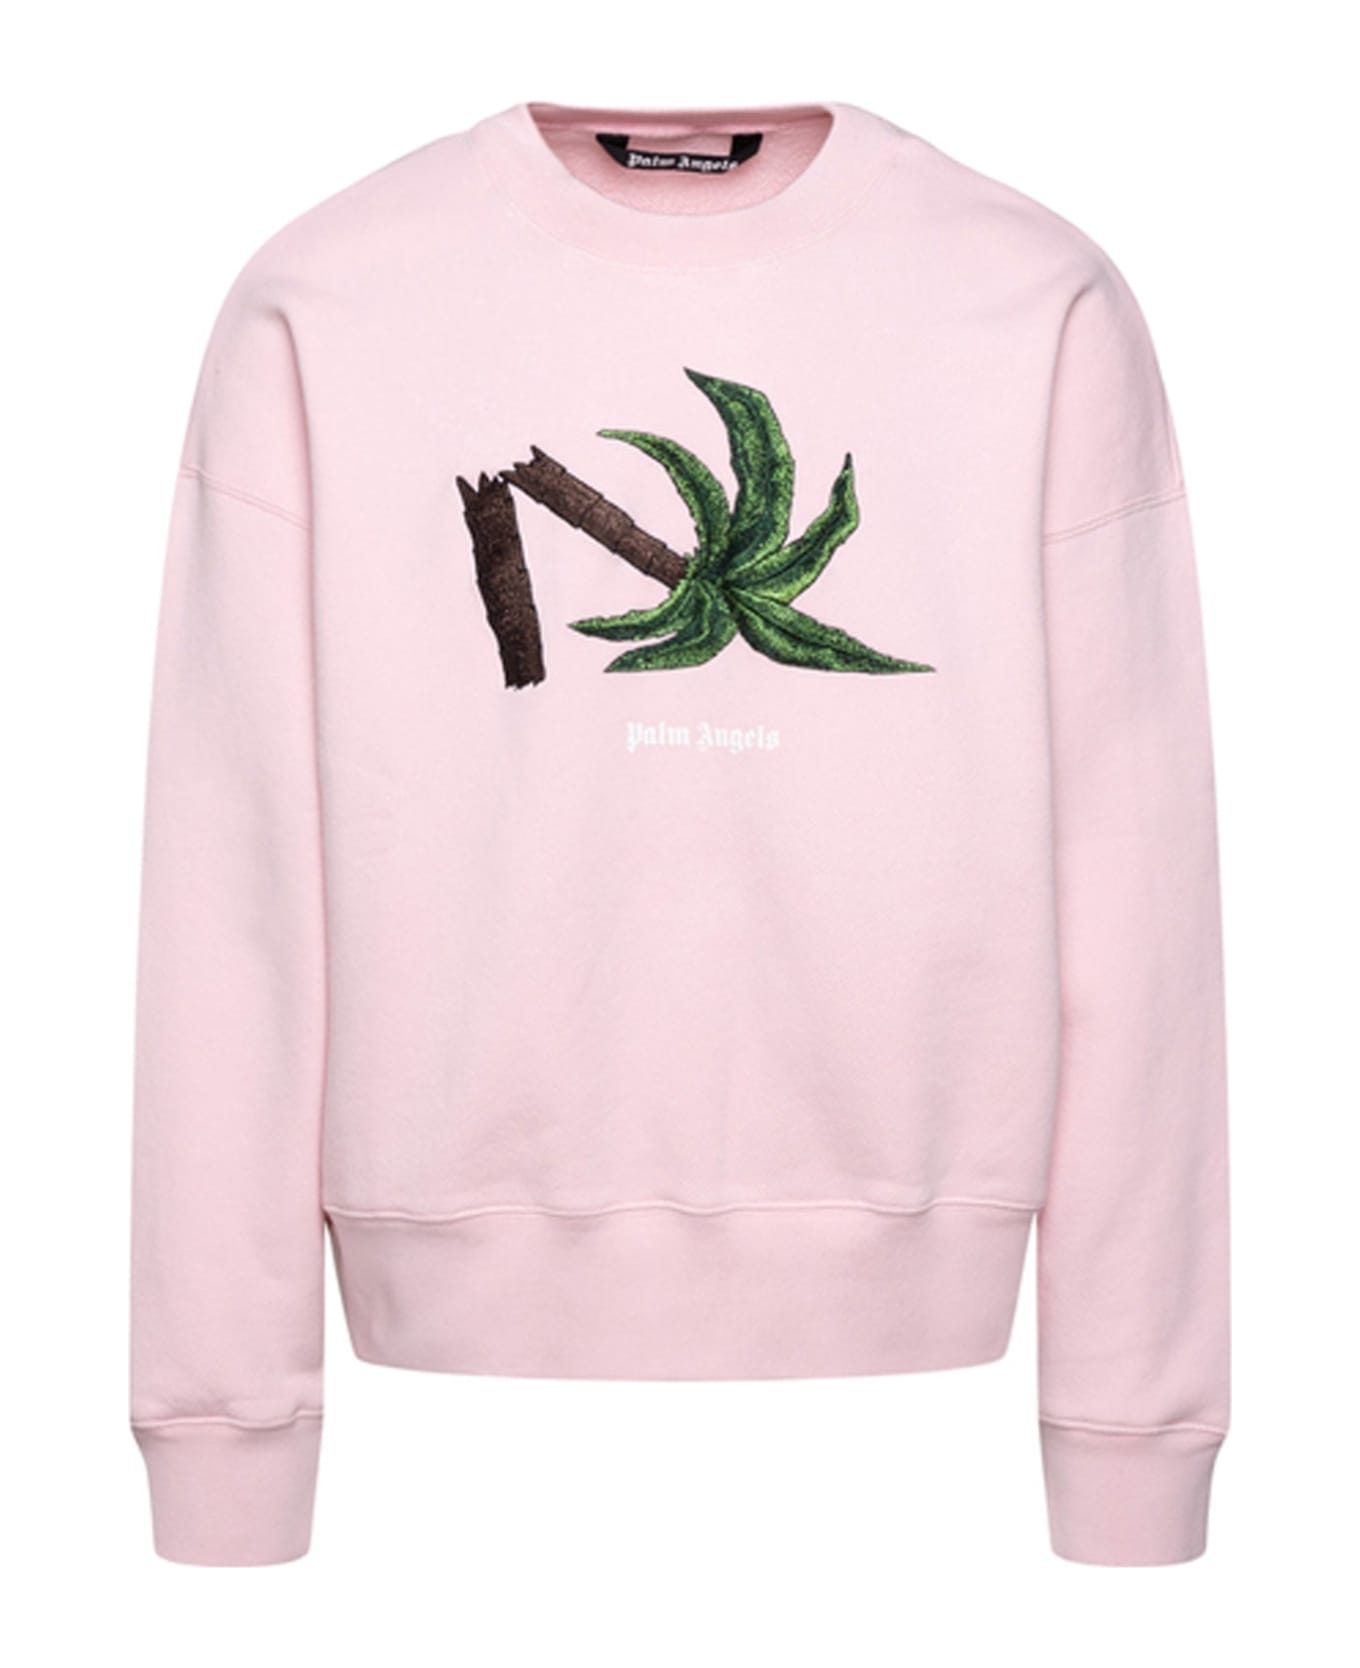 Palm Angels Logo Sweatshirt - Pink